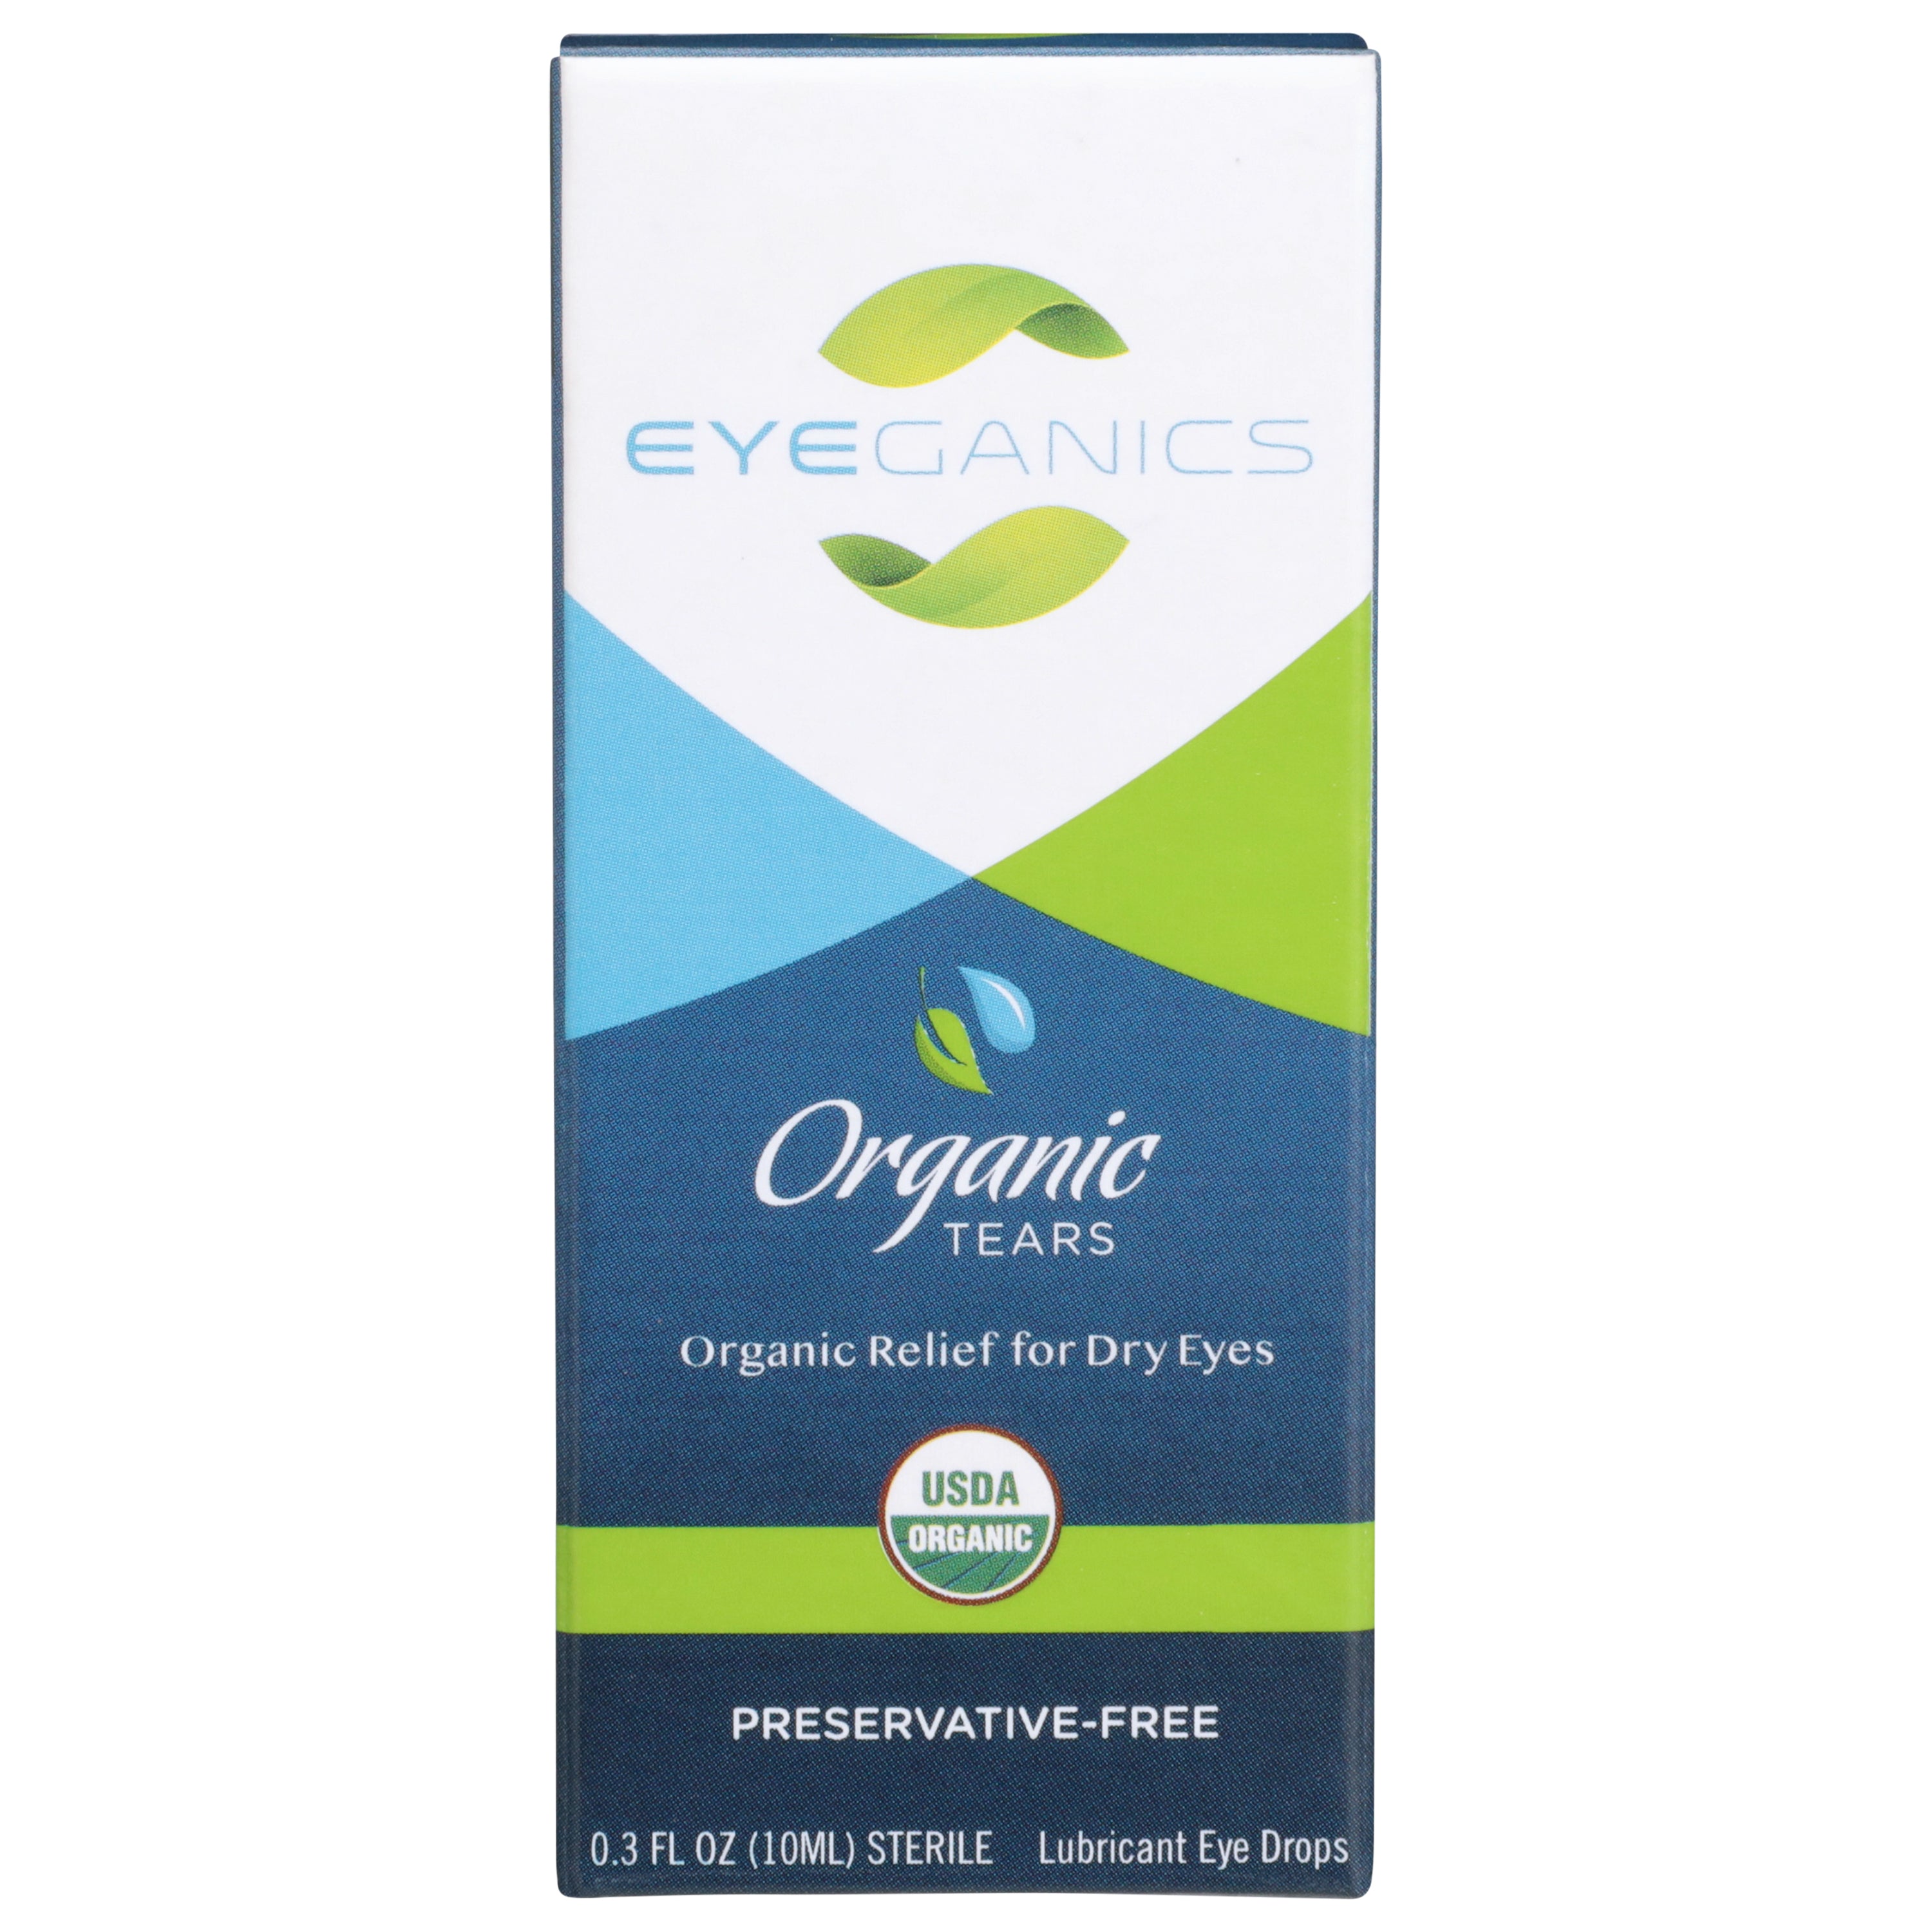 Eyeganics Organic Tears by Eyeganics